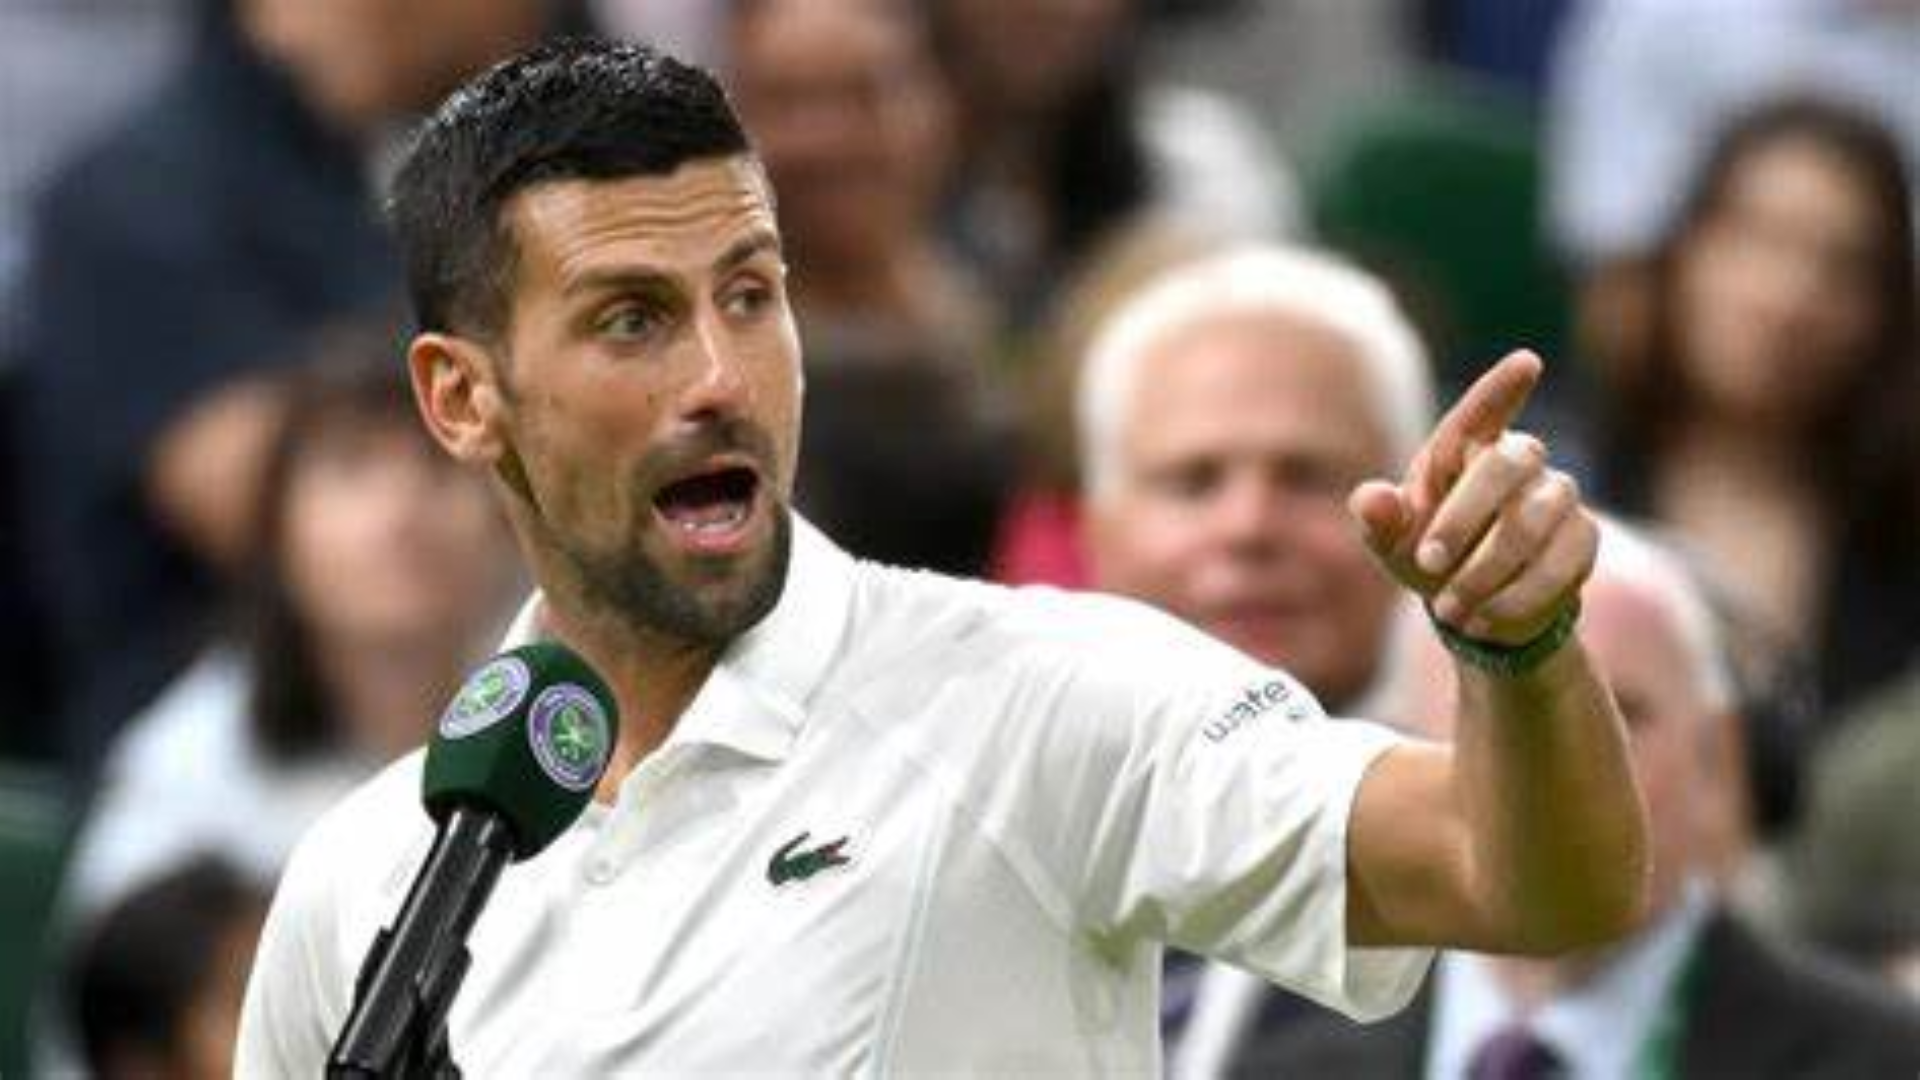 Novak Djokovic Wimbledon Clash: On-Court Drama And Crowd Controversy